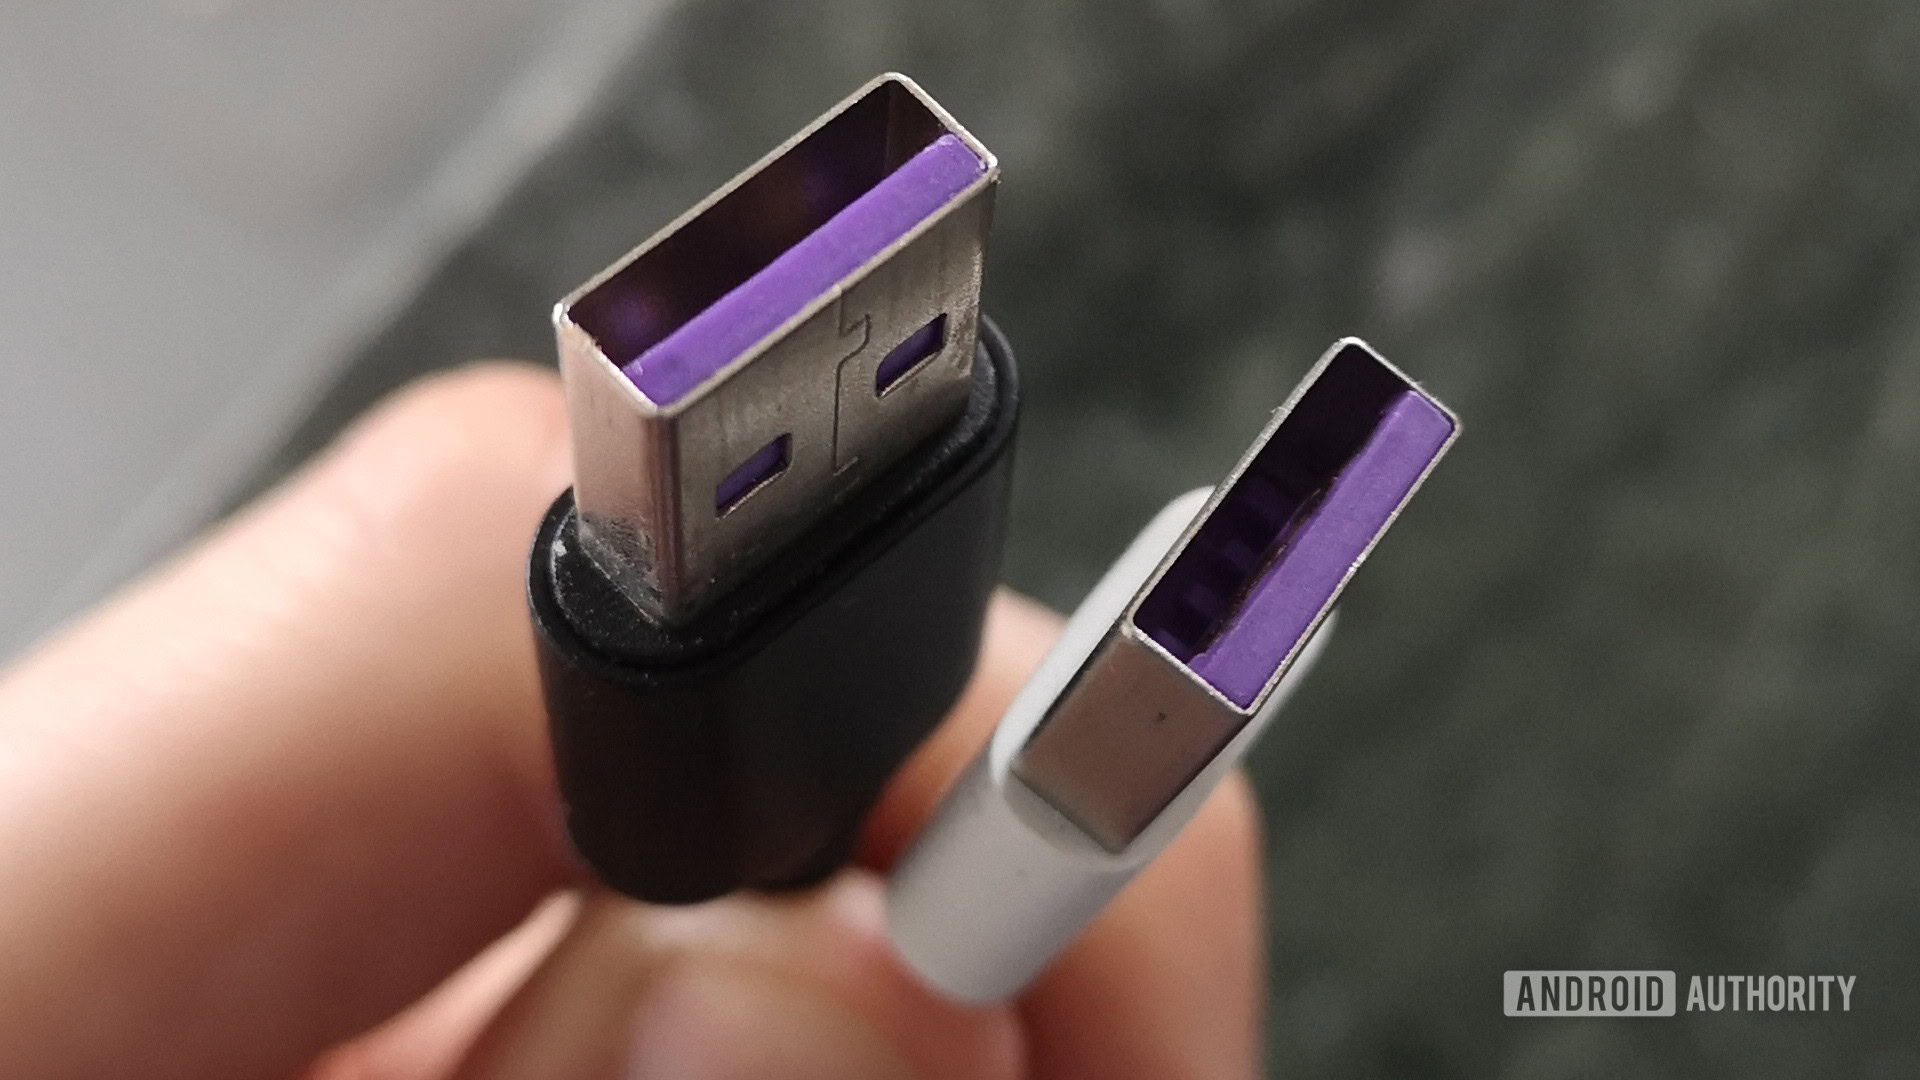 USB compatibility